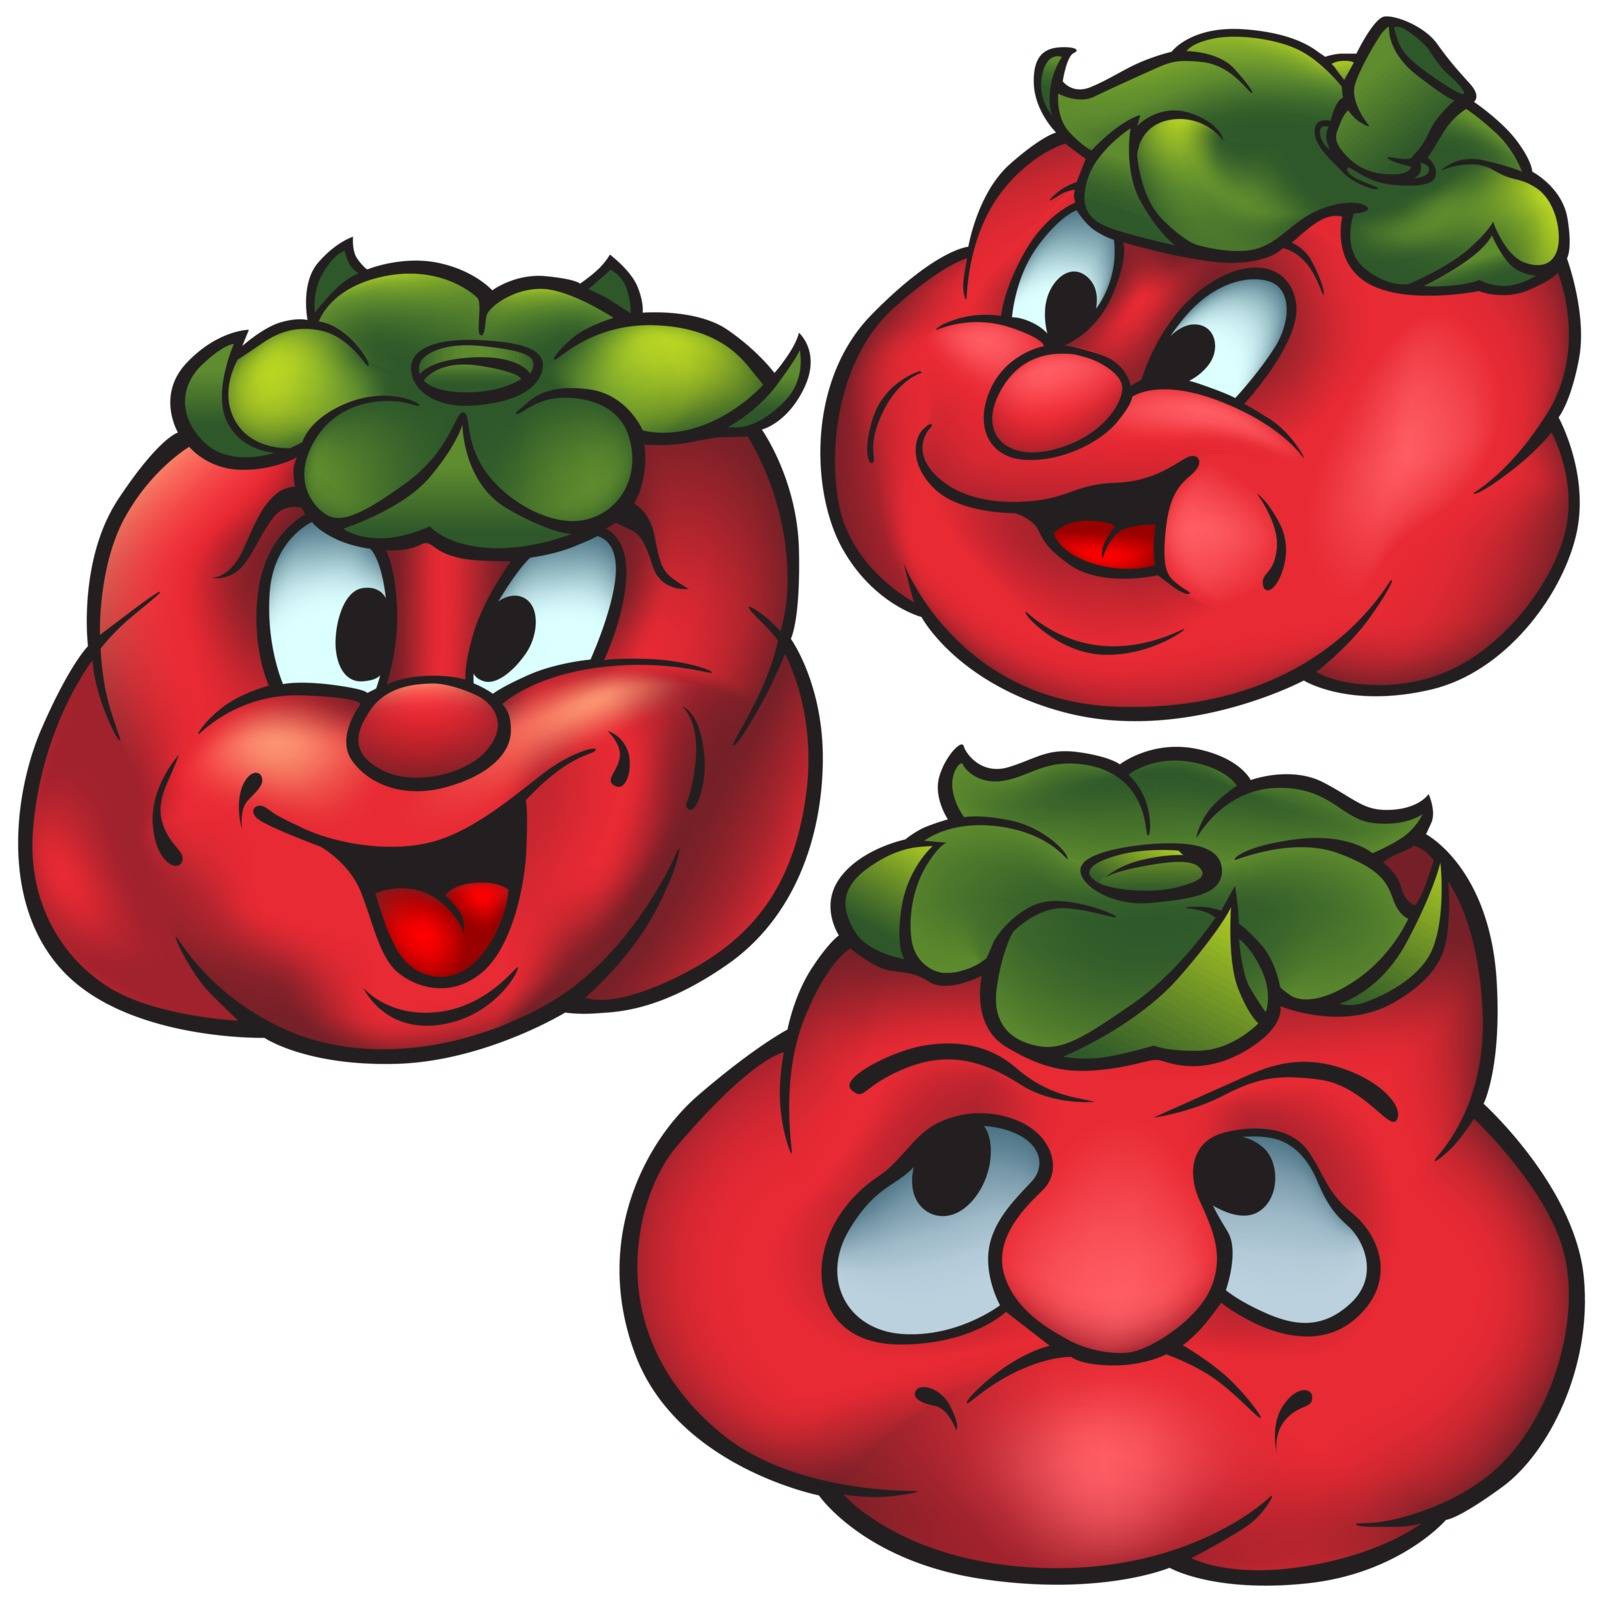 Three Tomatoes - Colored Cartoon Illustration, Vector